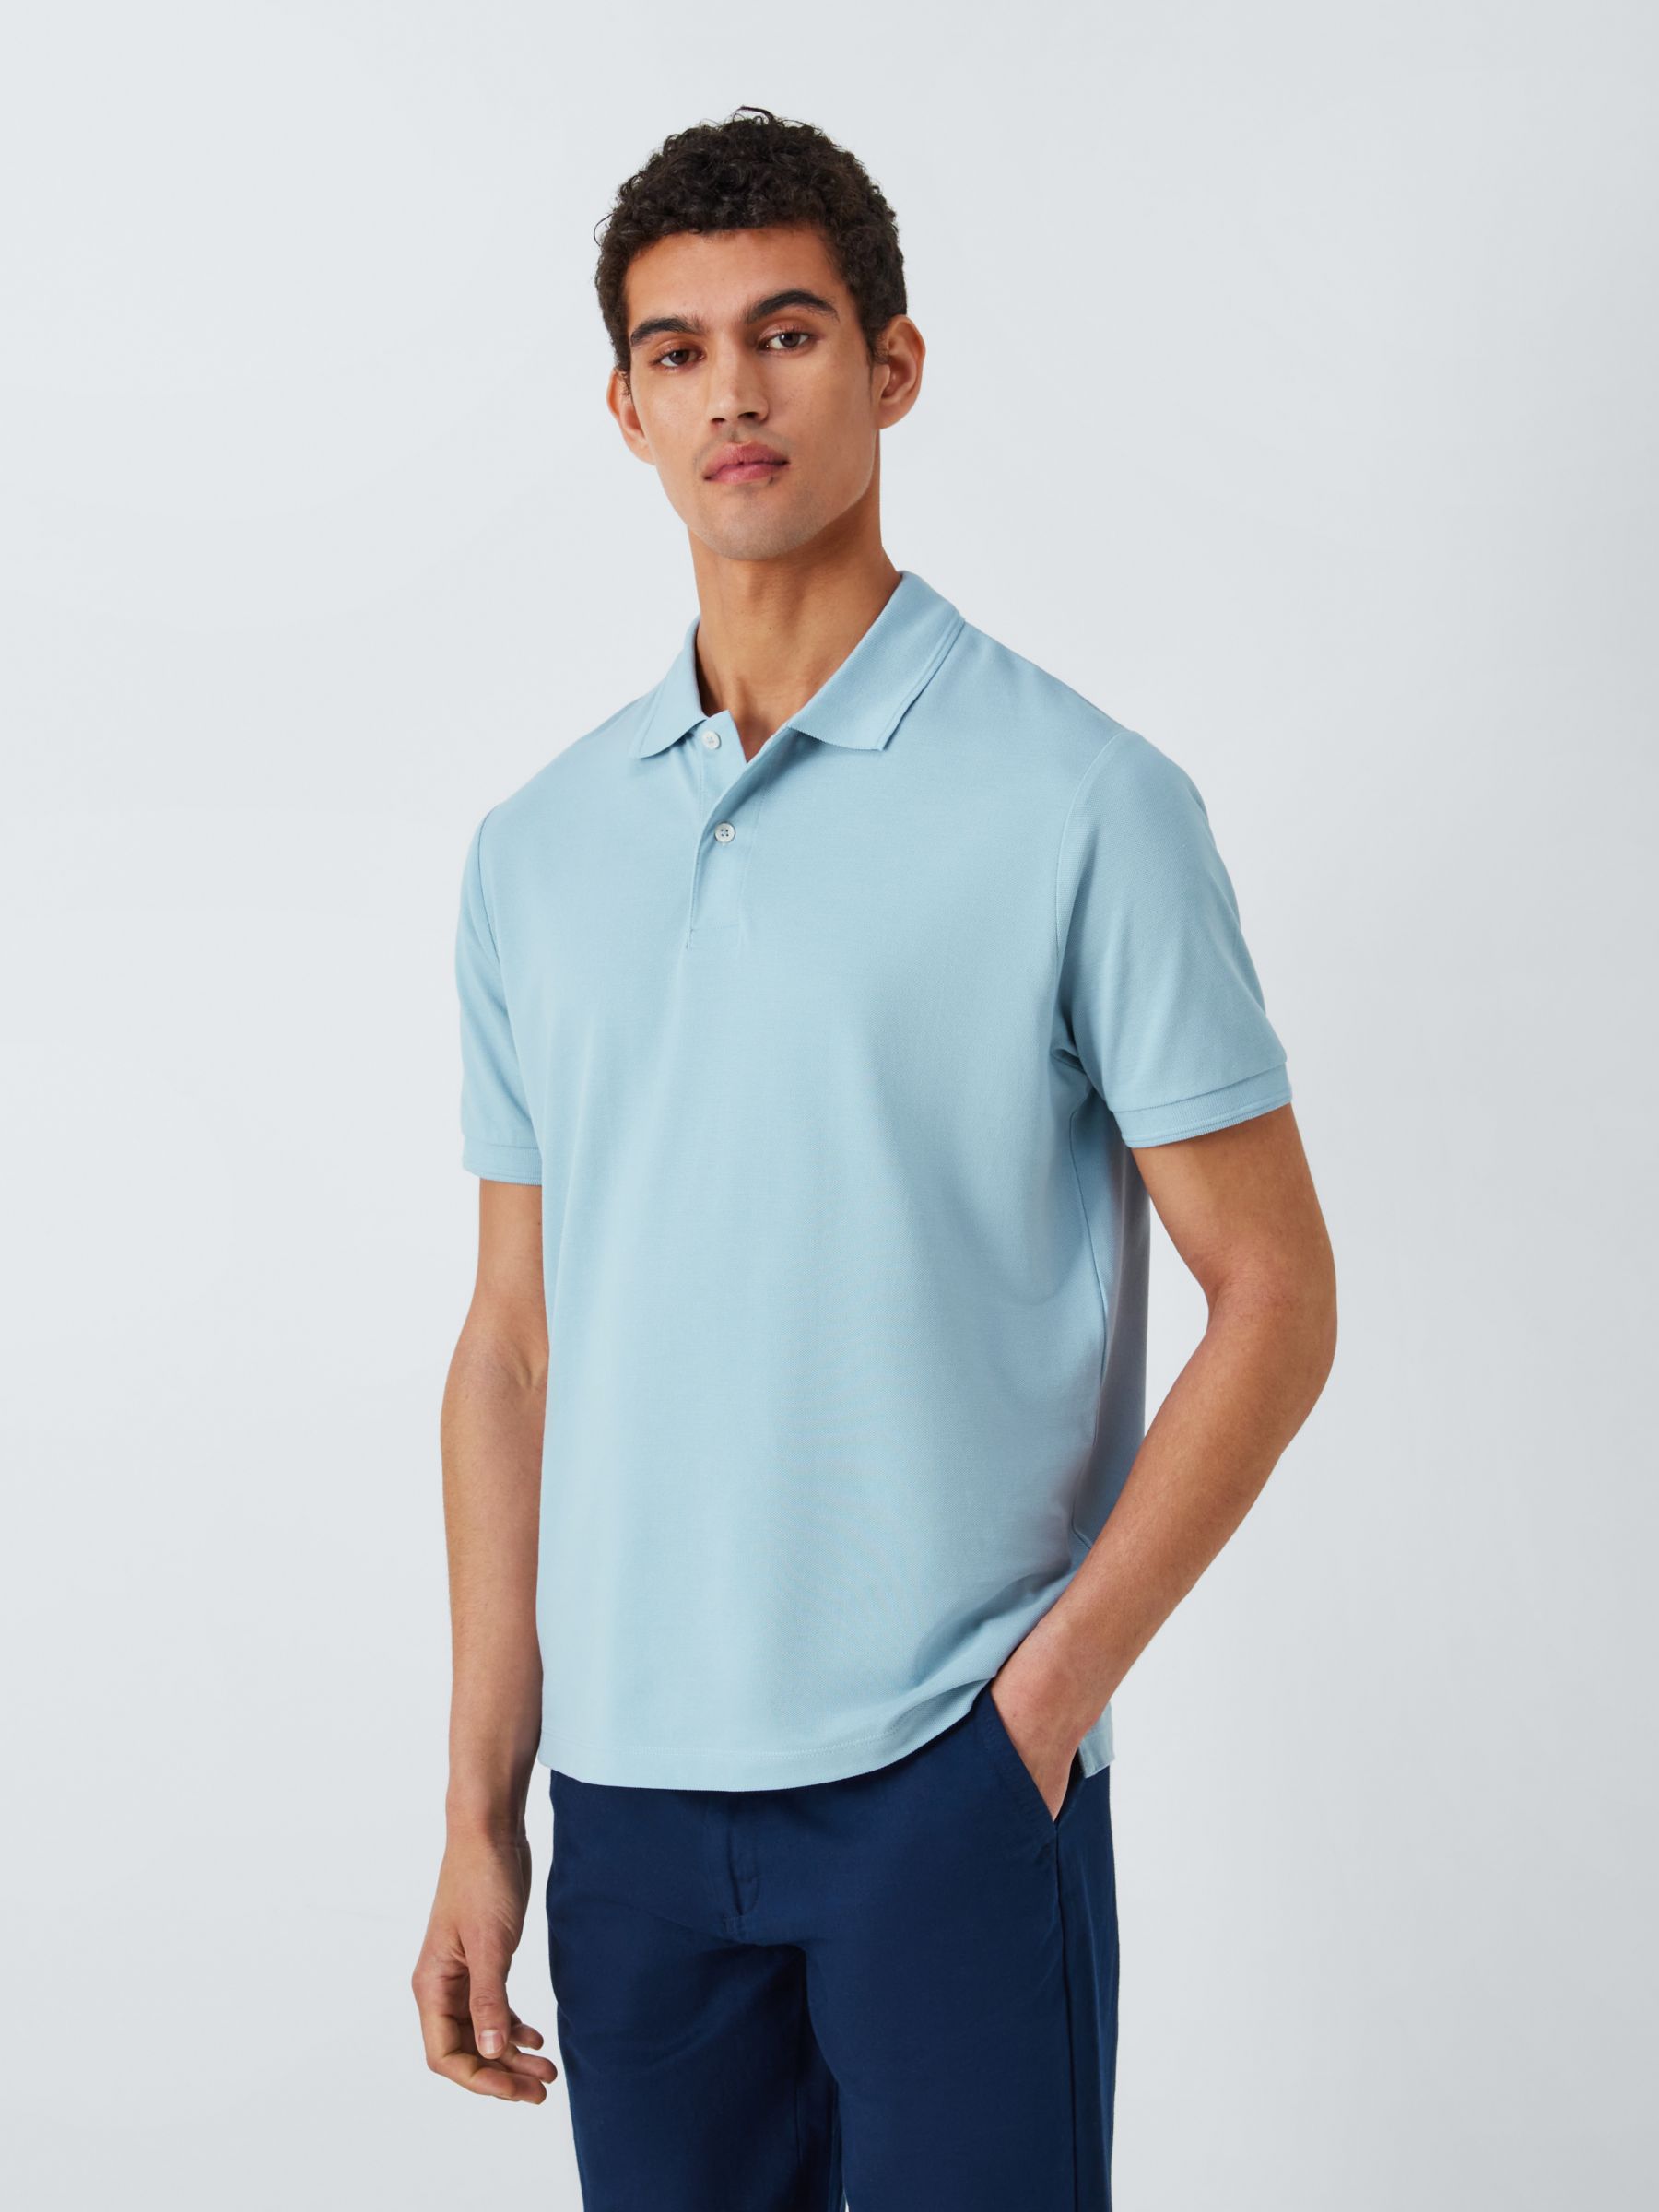 John Lewis Supima Cotton Jersey Polo Shirt, Blue Fog, S